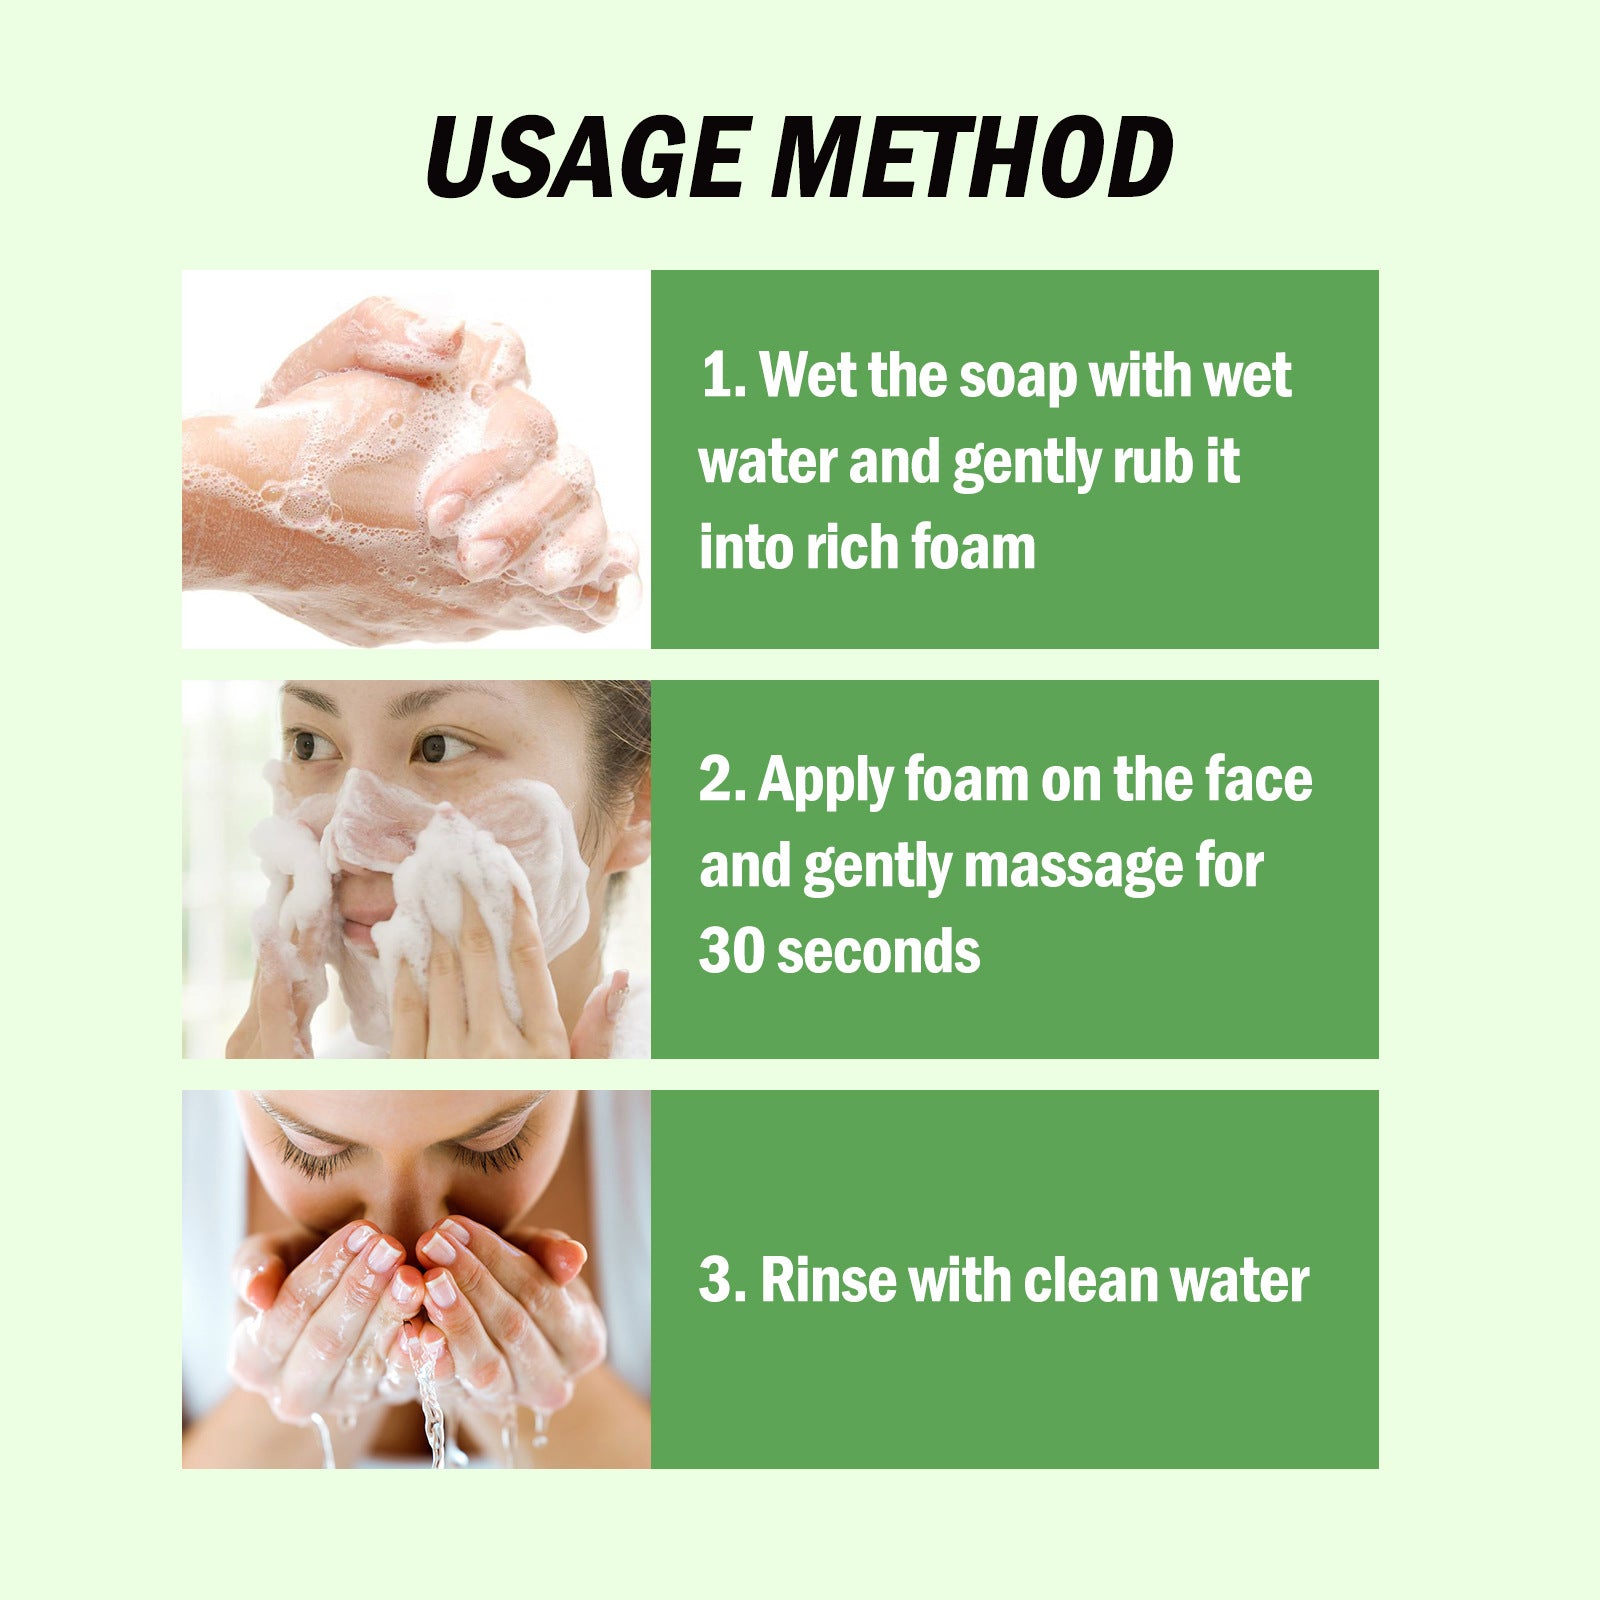 Tiktok/Douyin Hot Jaysuing Bamboo Charcoal Facial Soap 100g 【Tiktok抖音爆款】Jaysuing竹炭洁面皂